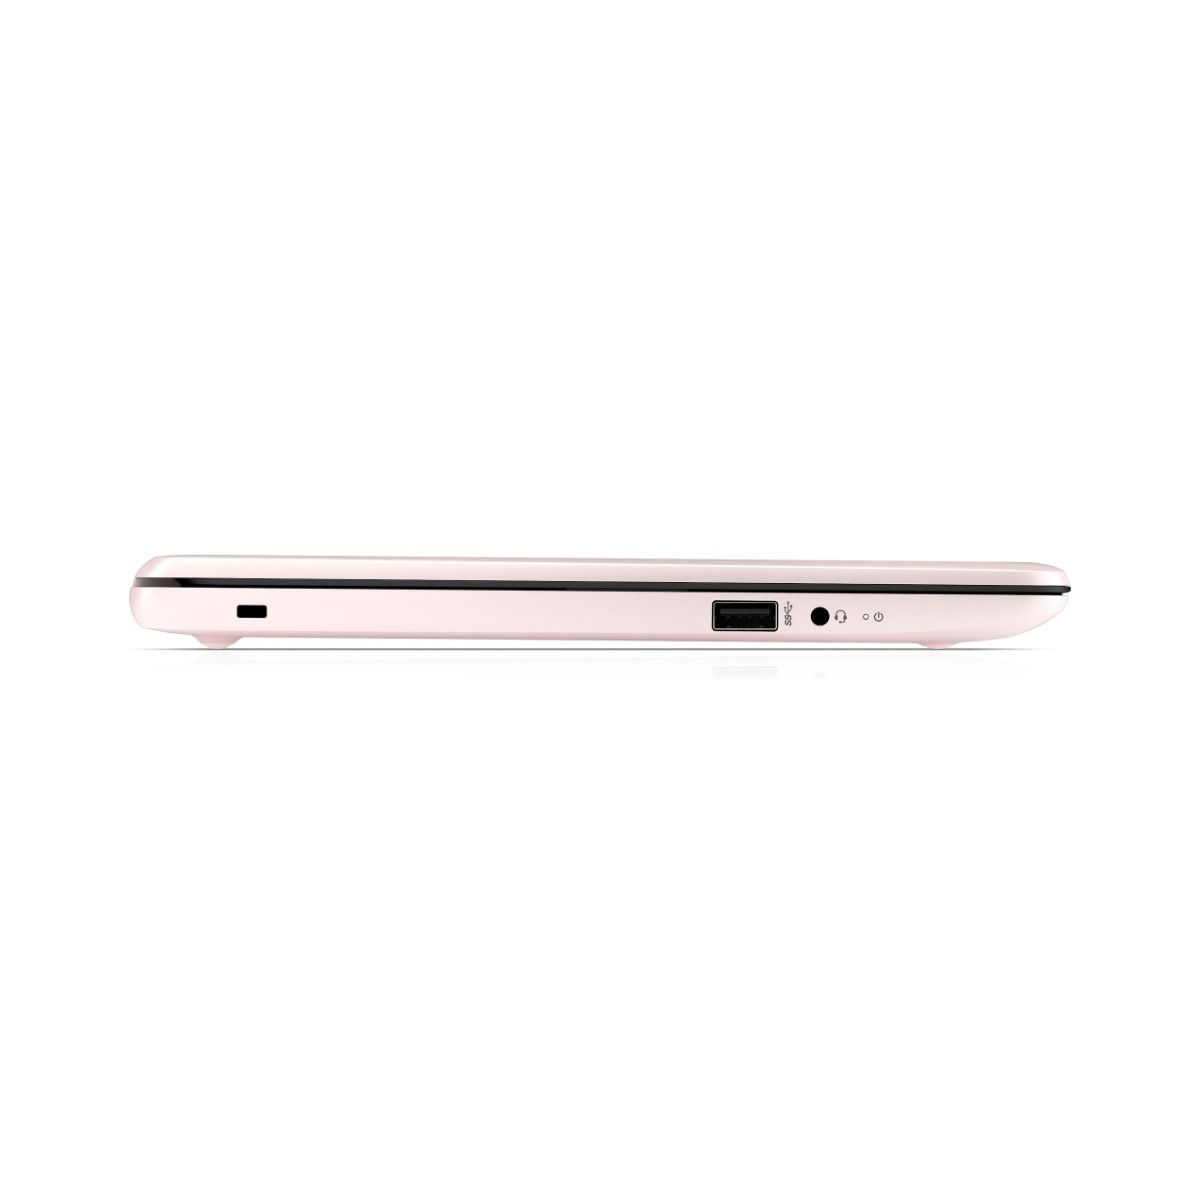 HP Stream 11-ak0517sa 11.6" Laptop Intel Celeron N4020 4GB RAM 64GB eMMC Pink